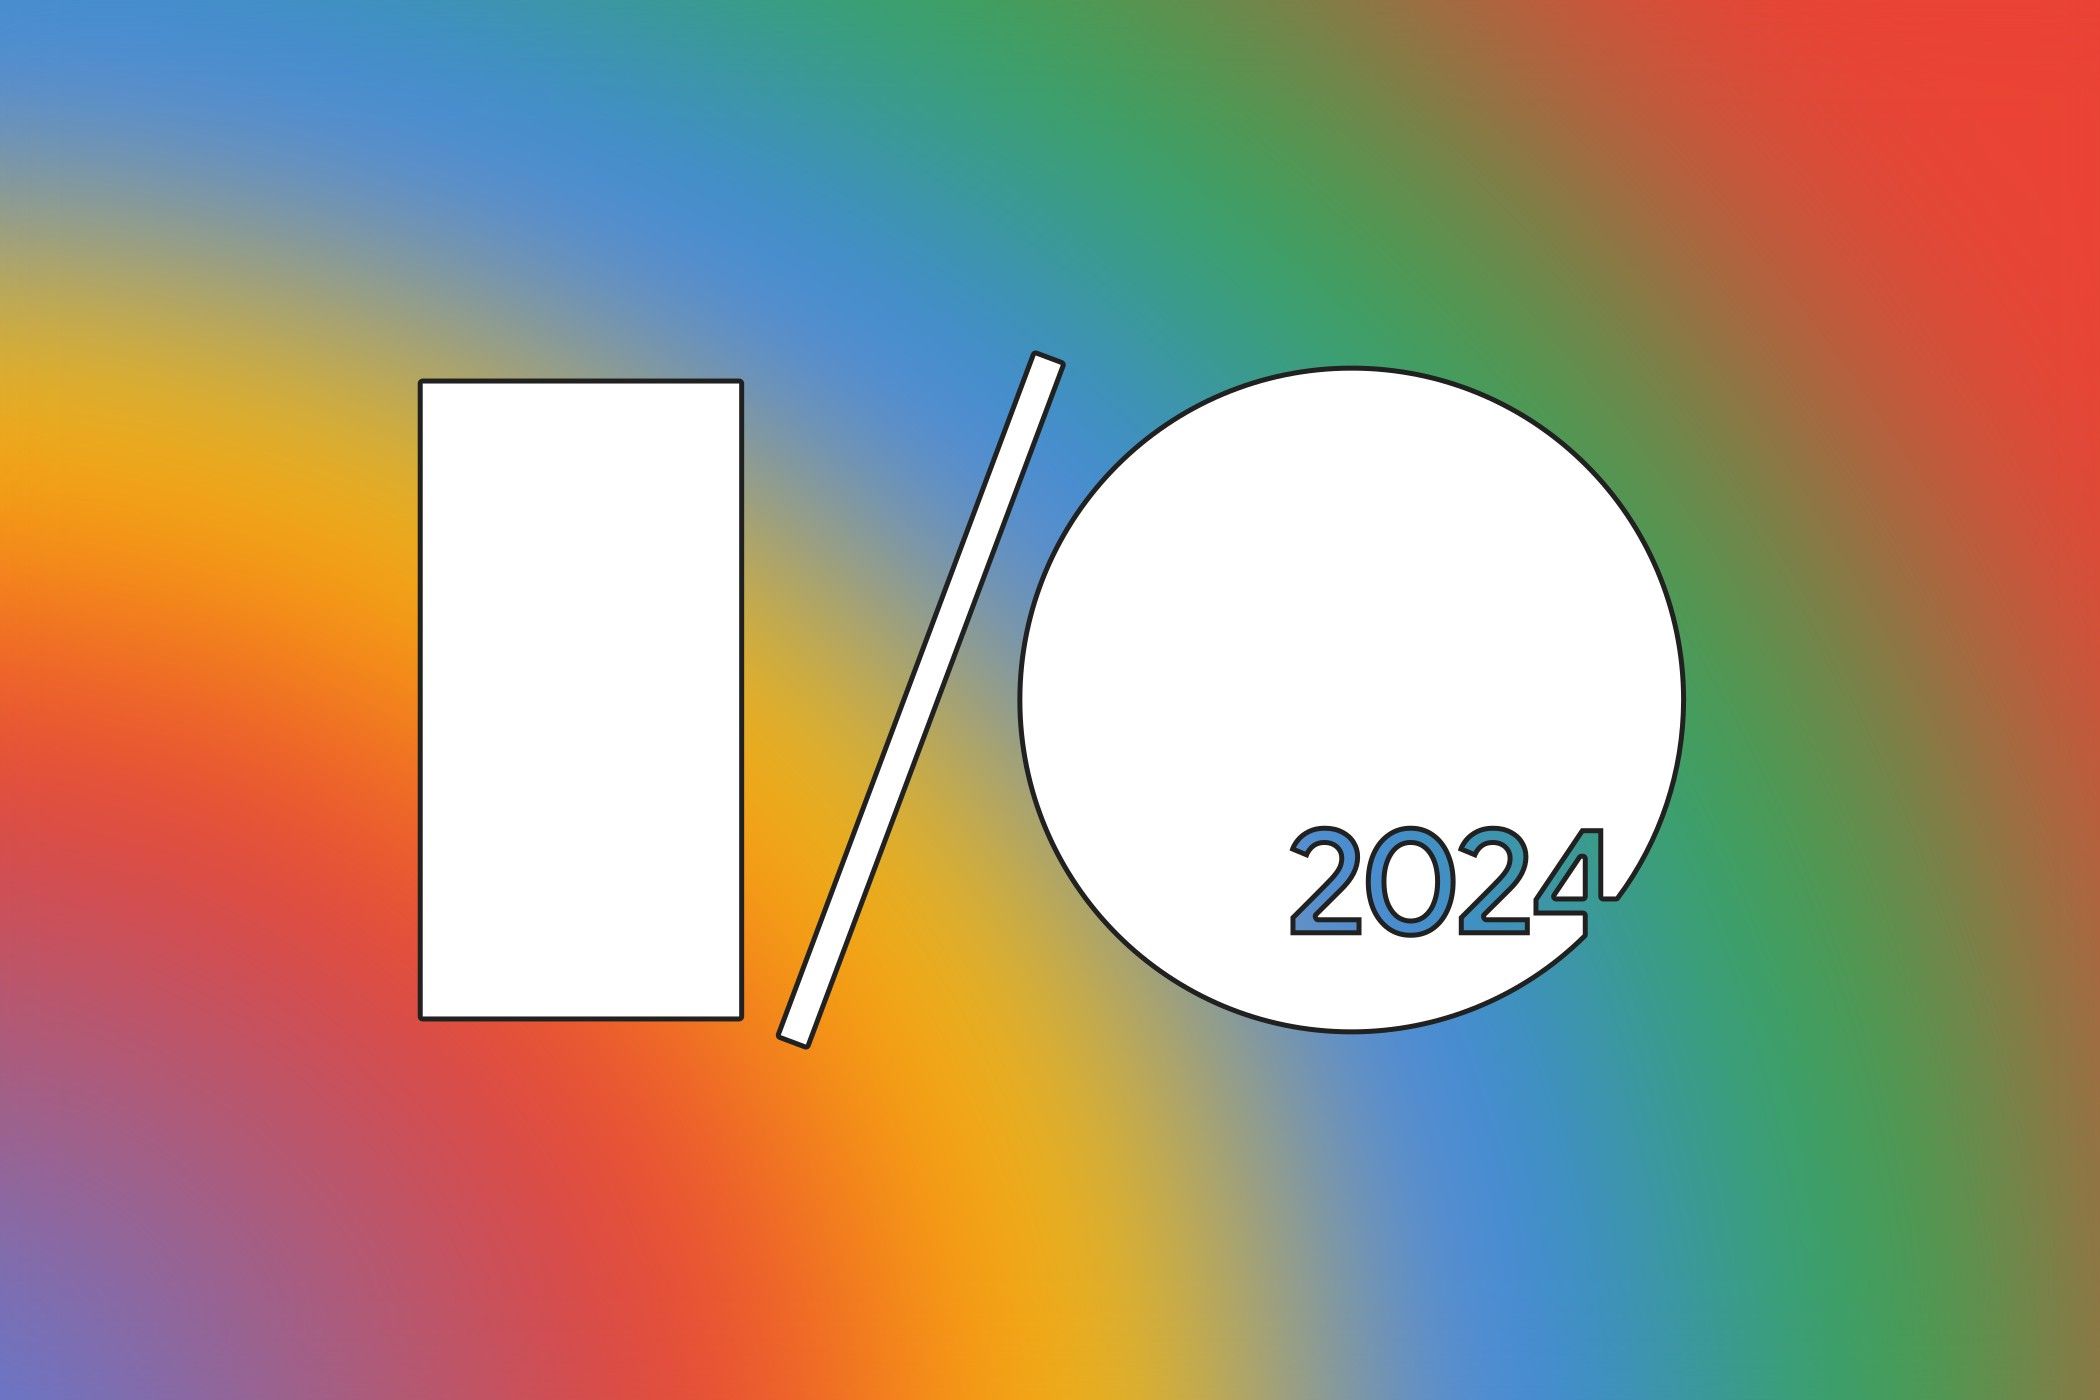 Google IO 2024 logo.